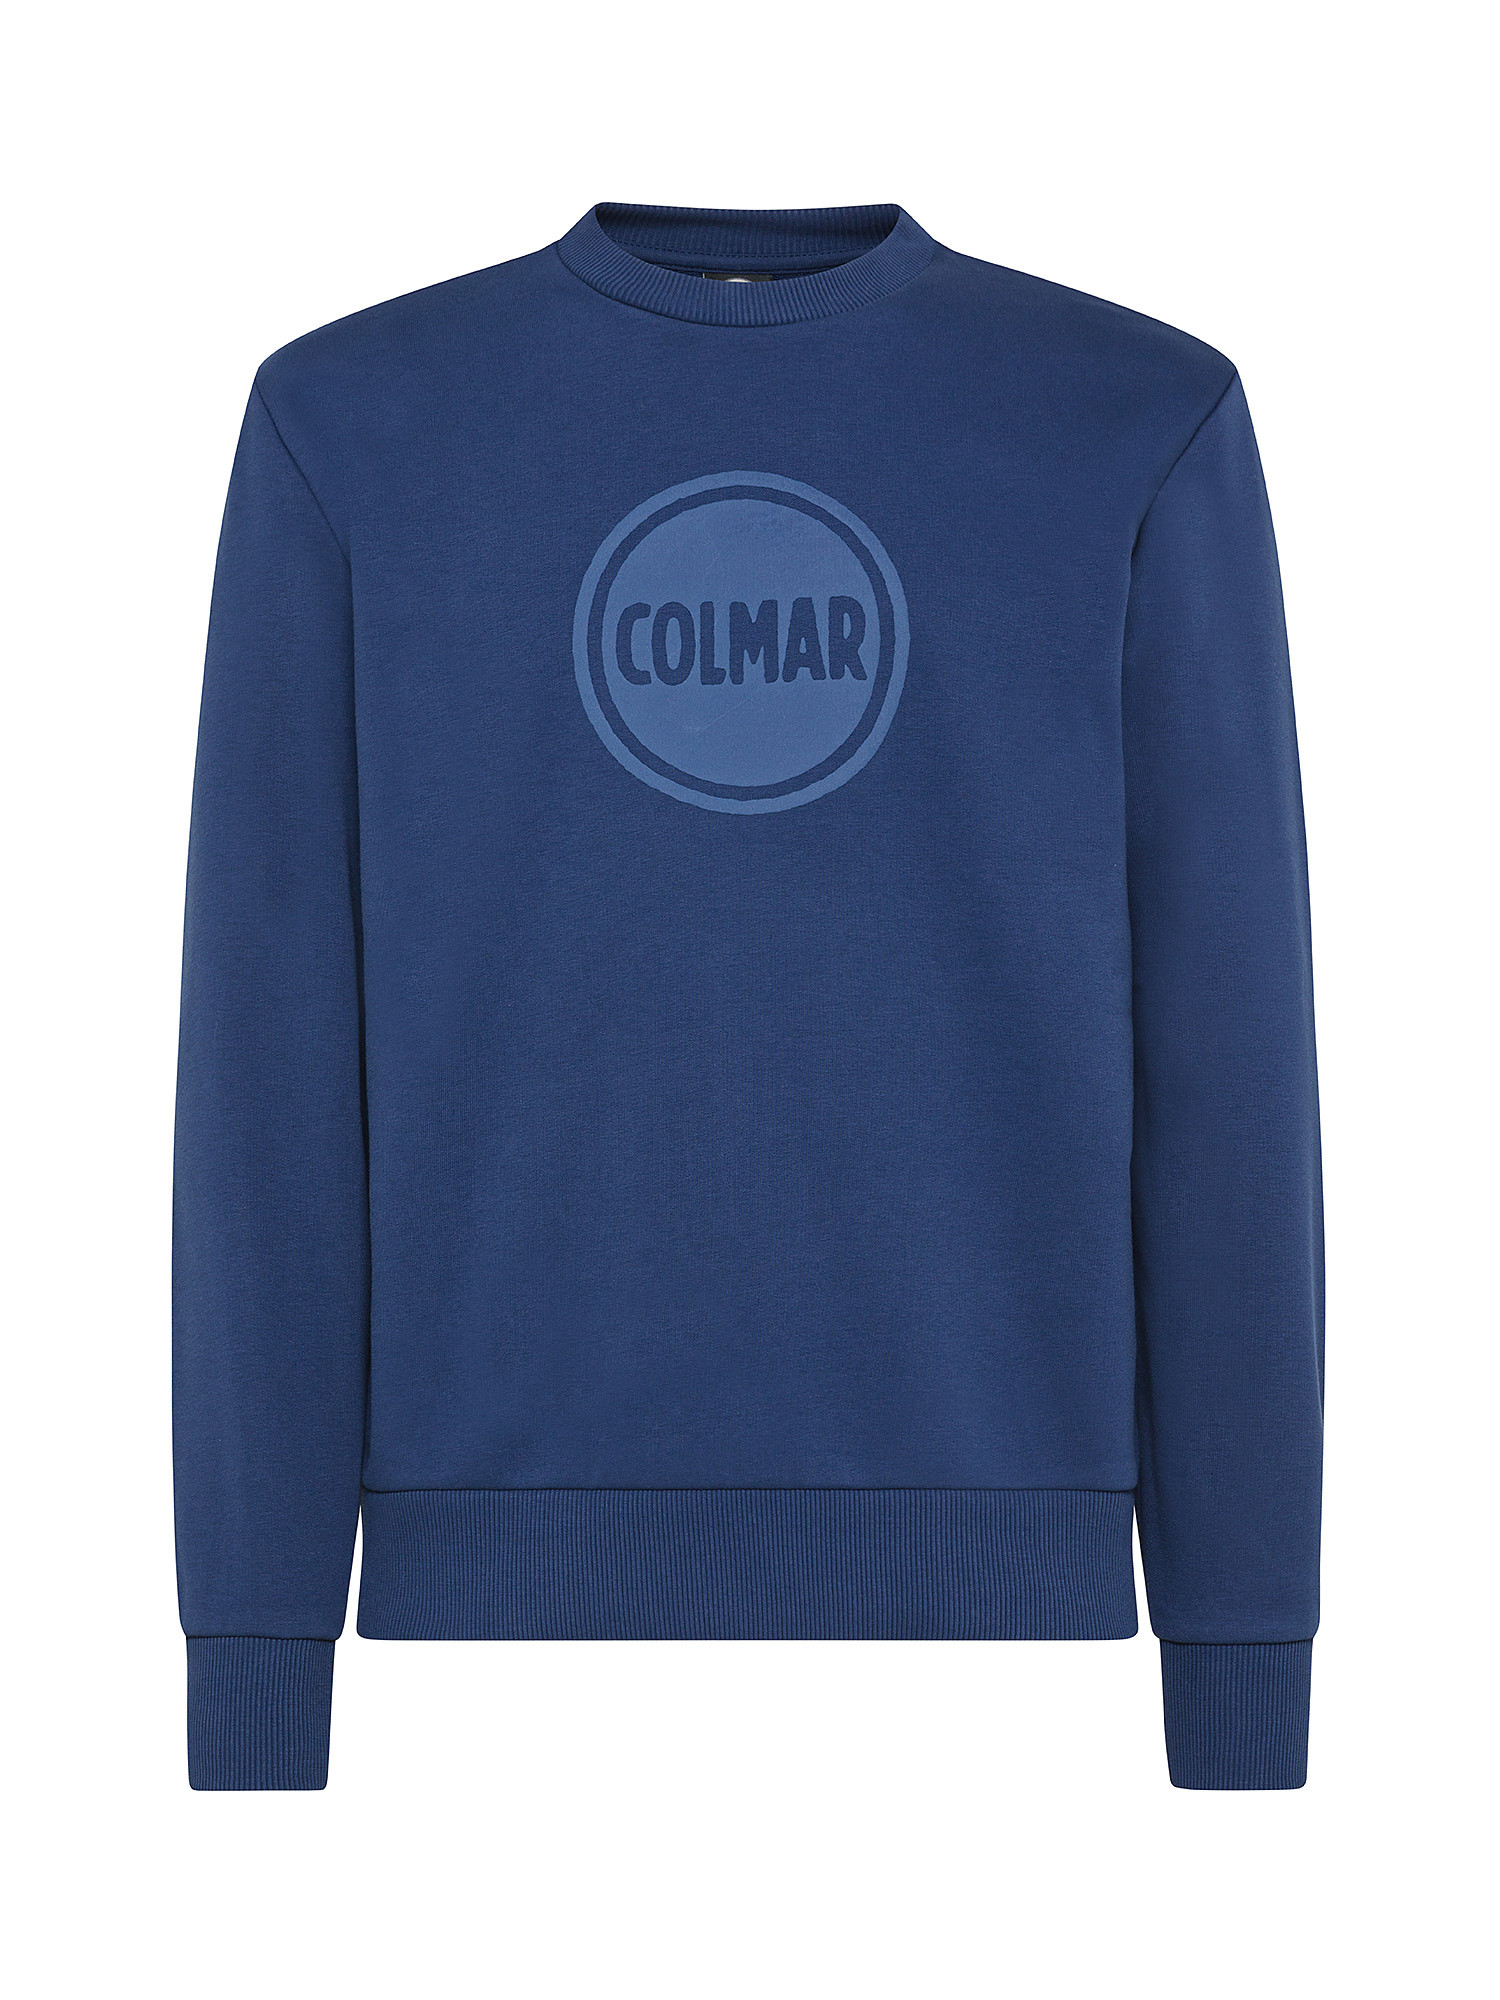 Colmar - Crewneck sweatshirt with one-color print, Royal Blue, large image number 0